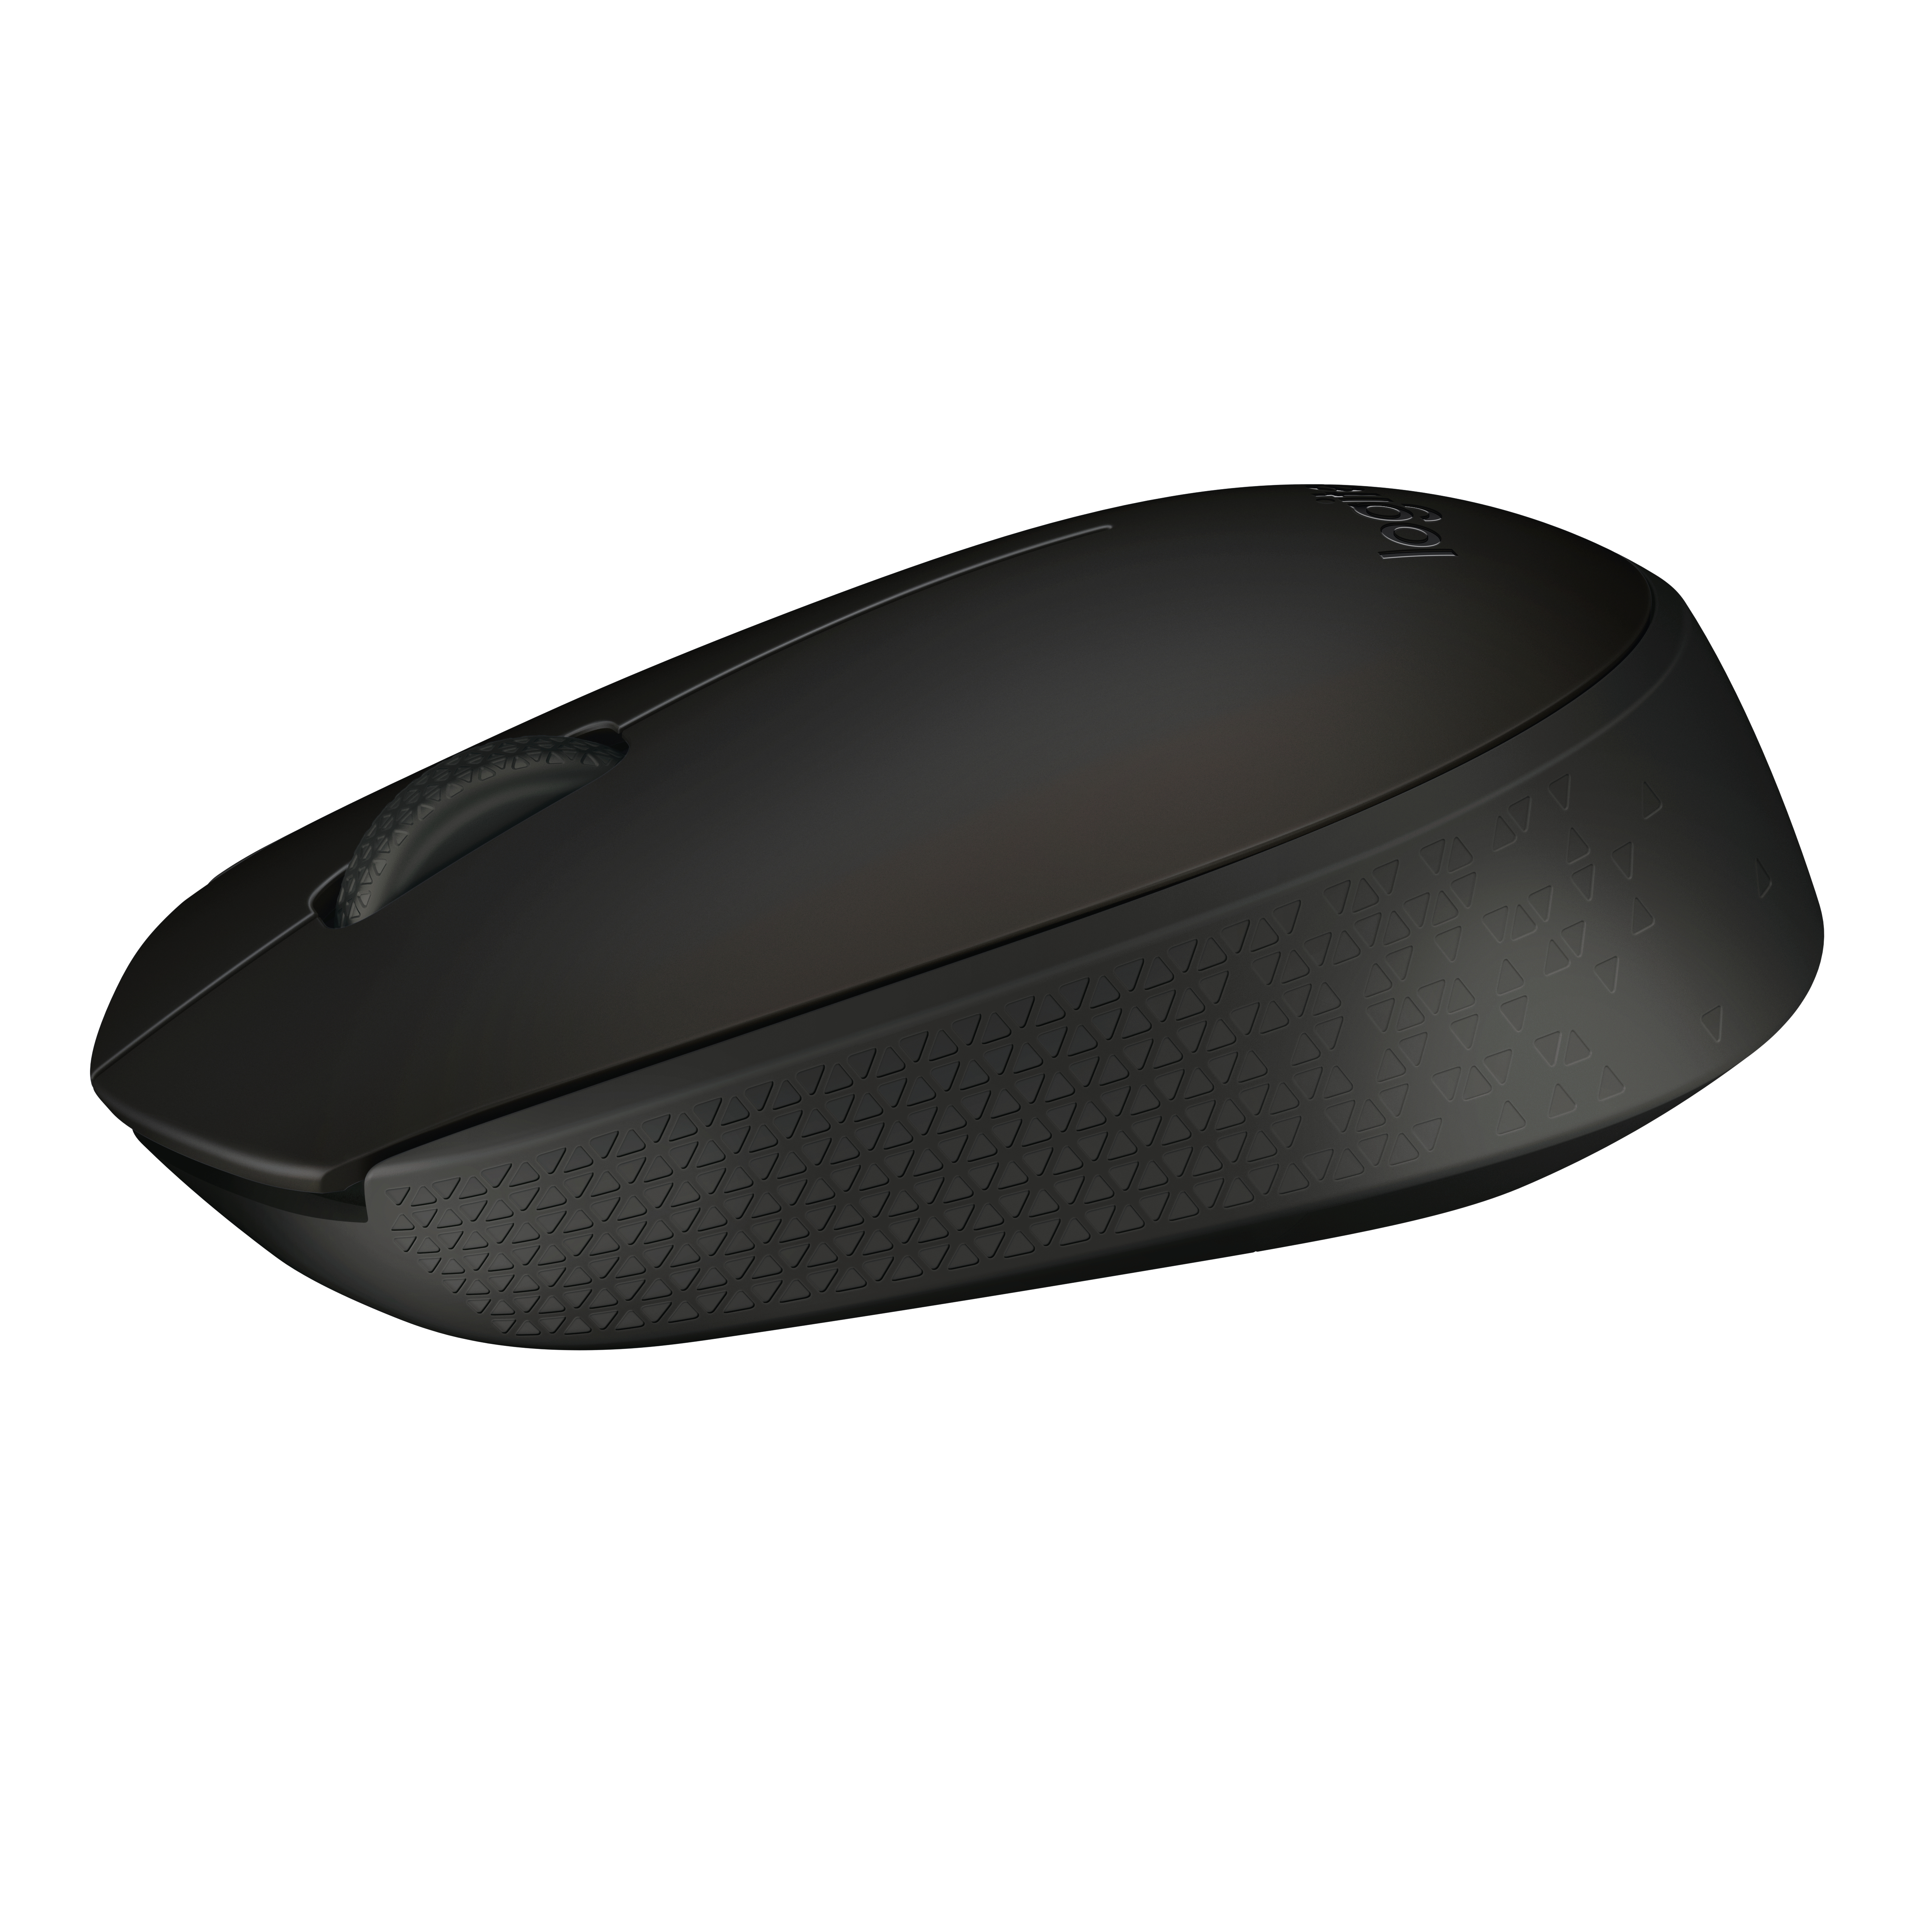 B170 Wireless Mouse 2.4Ghz Black EMEA